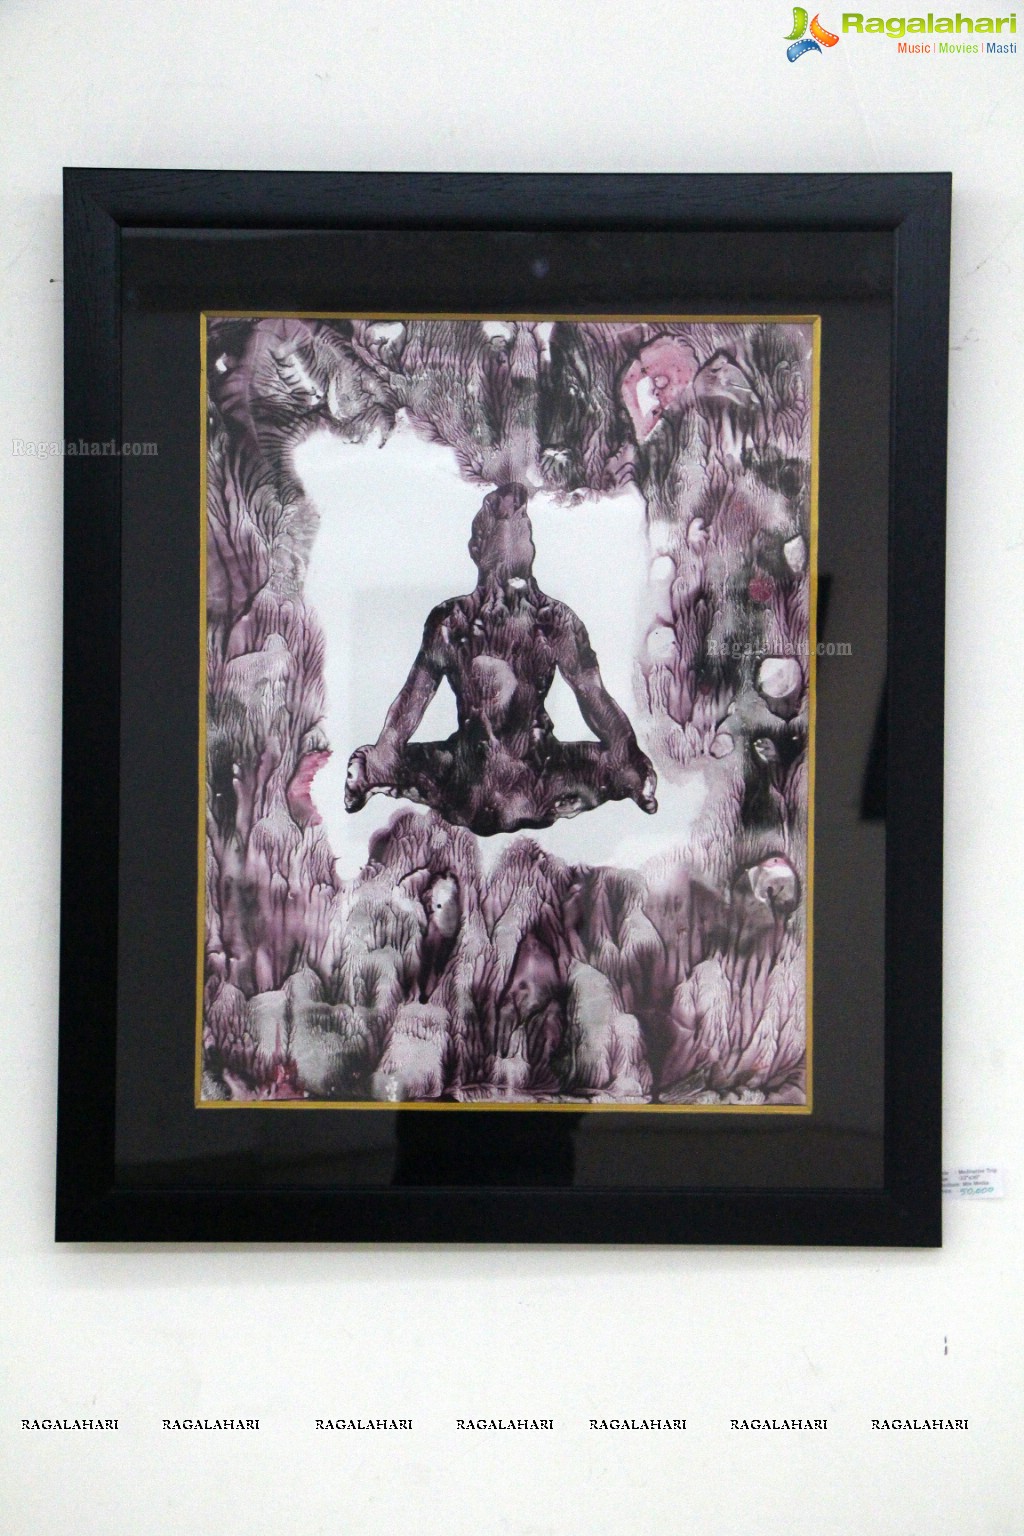 Solo Art Exhibition by Sairam Gurajala at State Art Gallery, Hyderabad